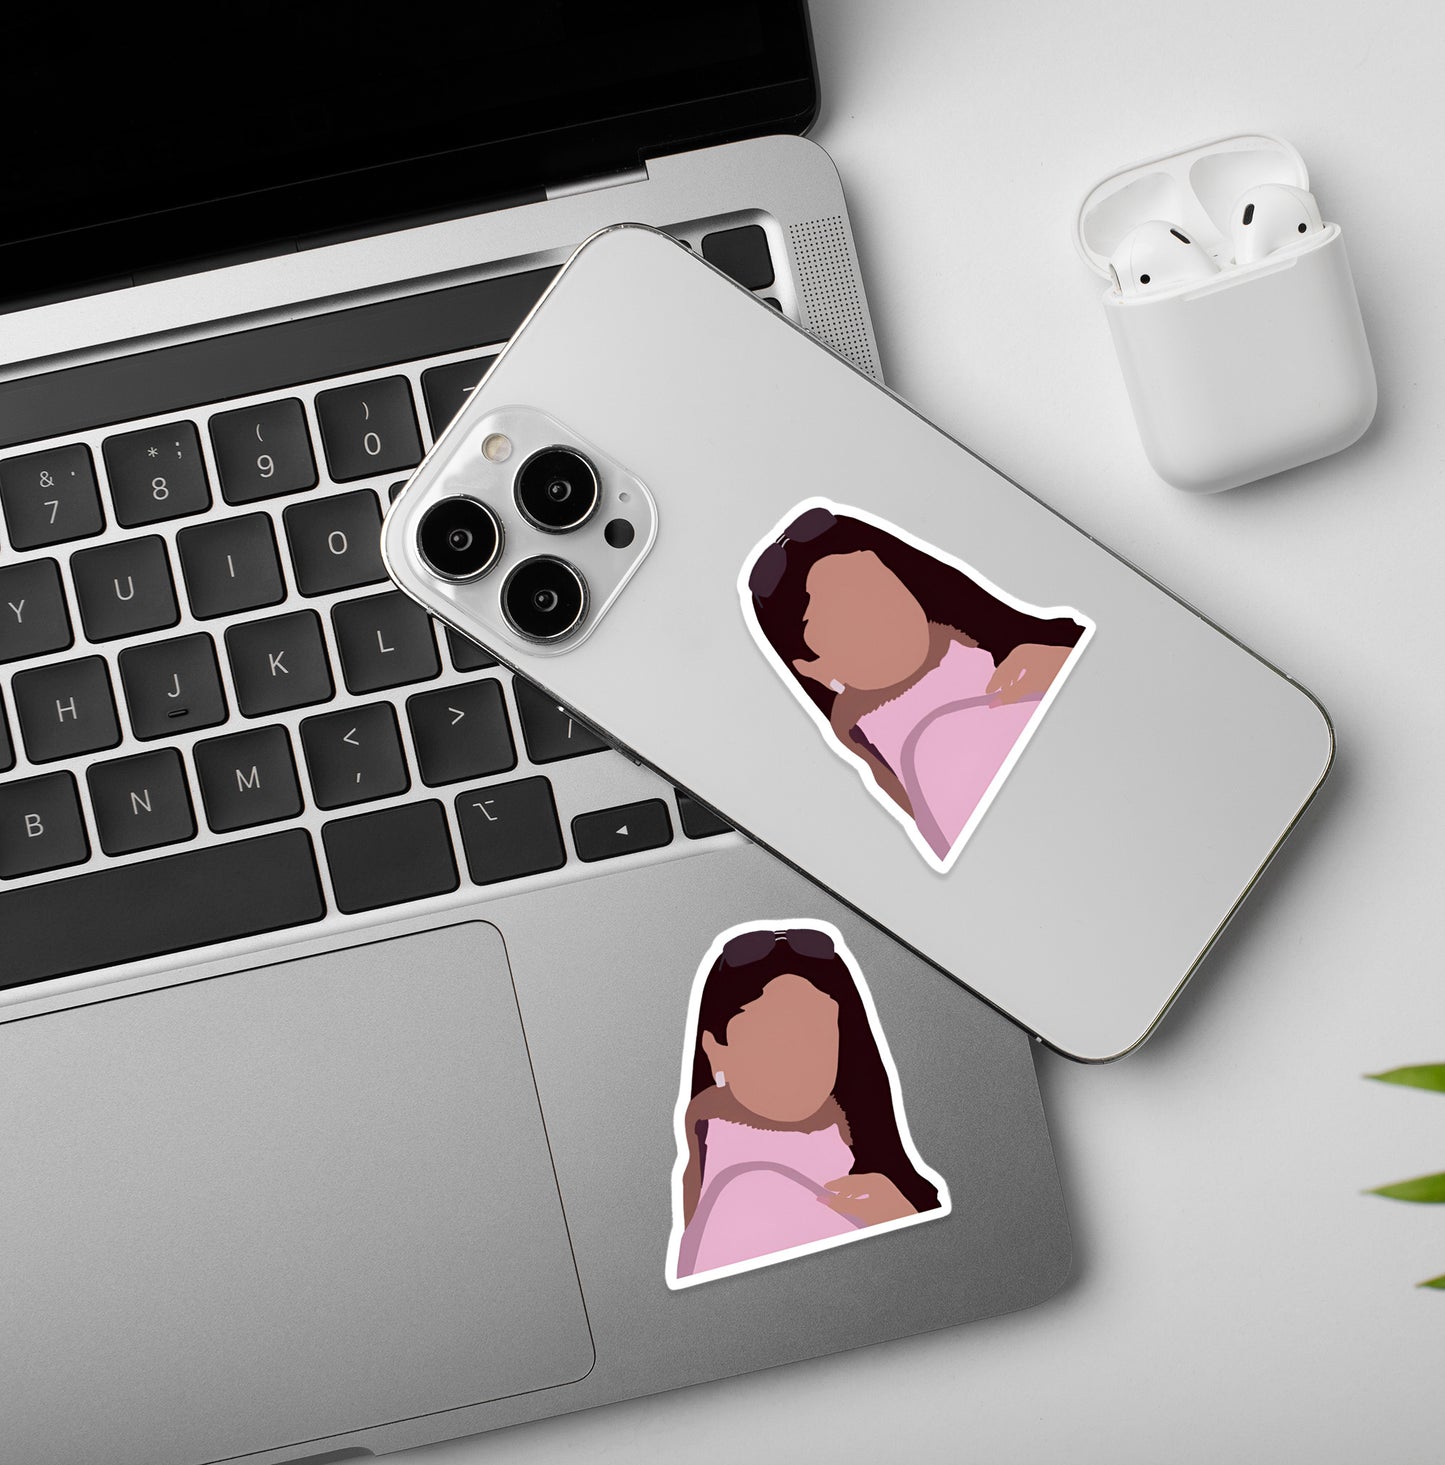 Poo - KKKG| Laptop & Phone Sticker